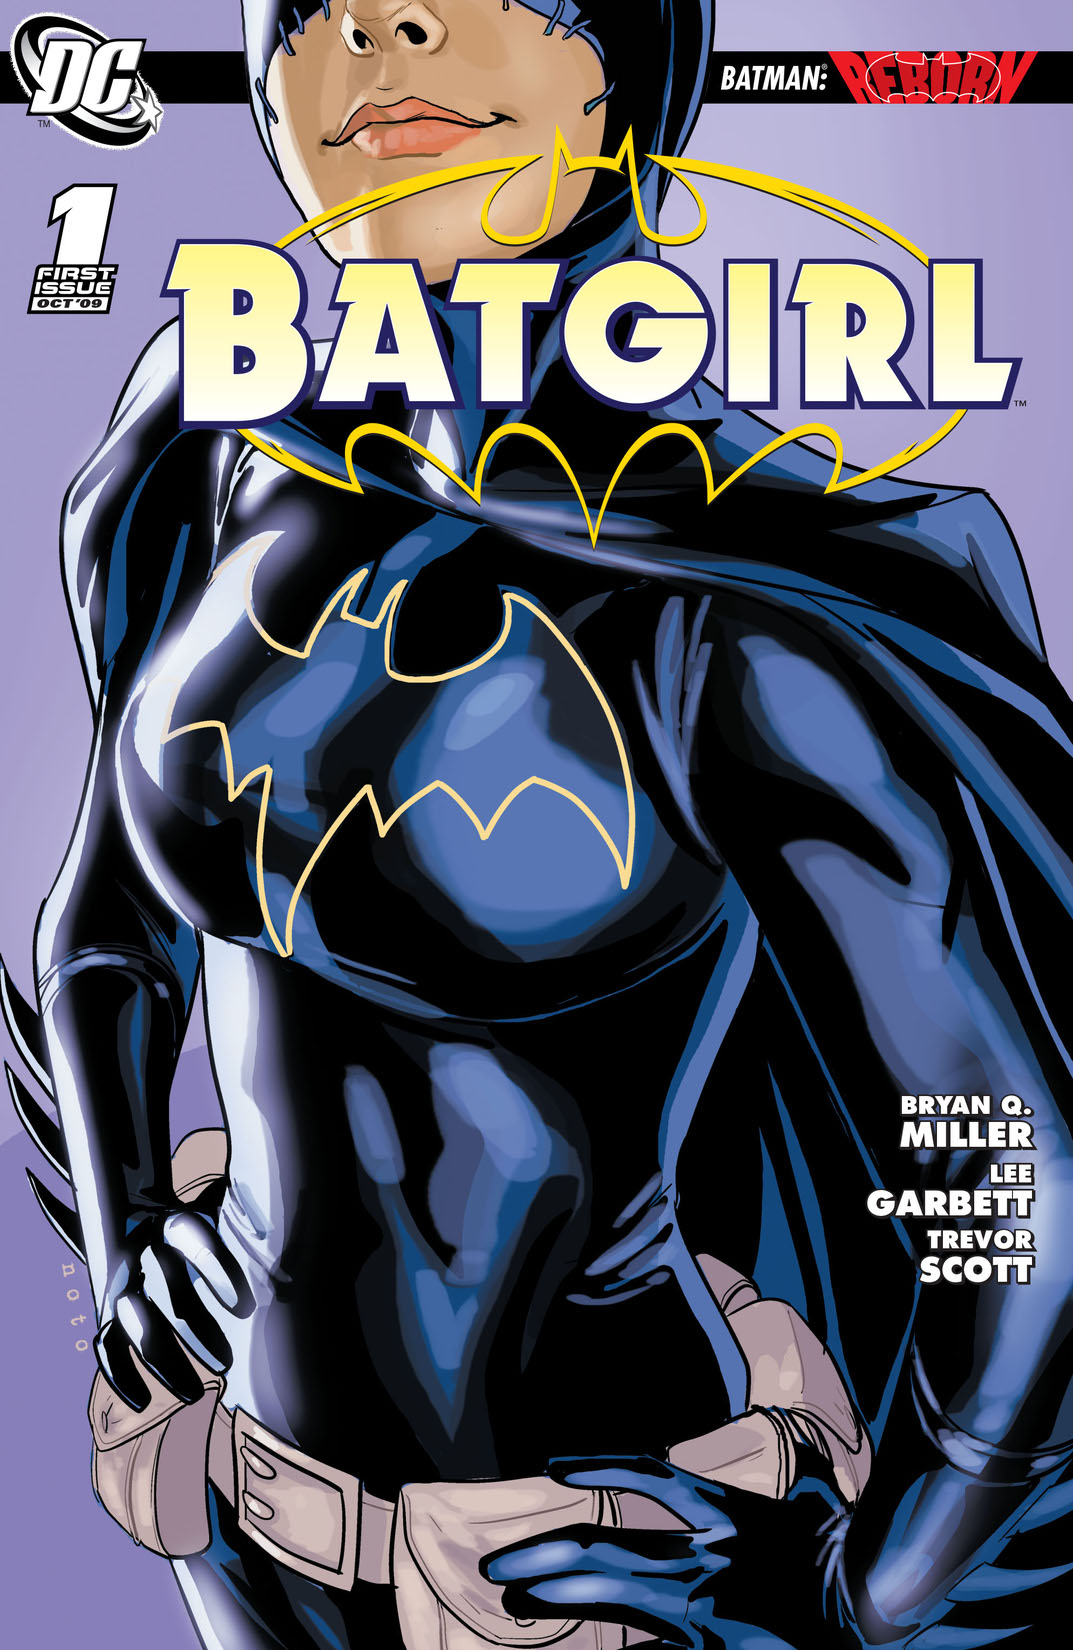 Batgirl (2009-) #1 preview images